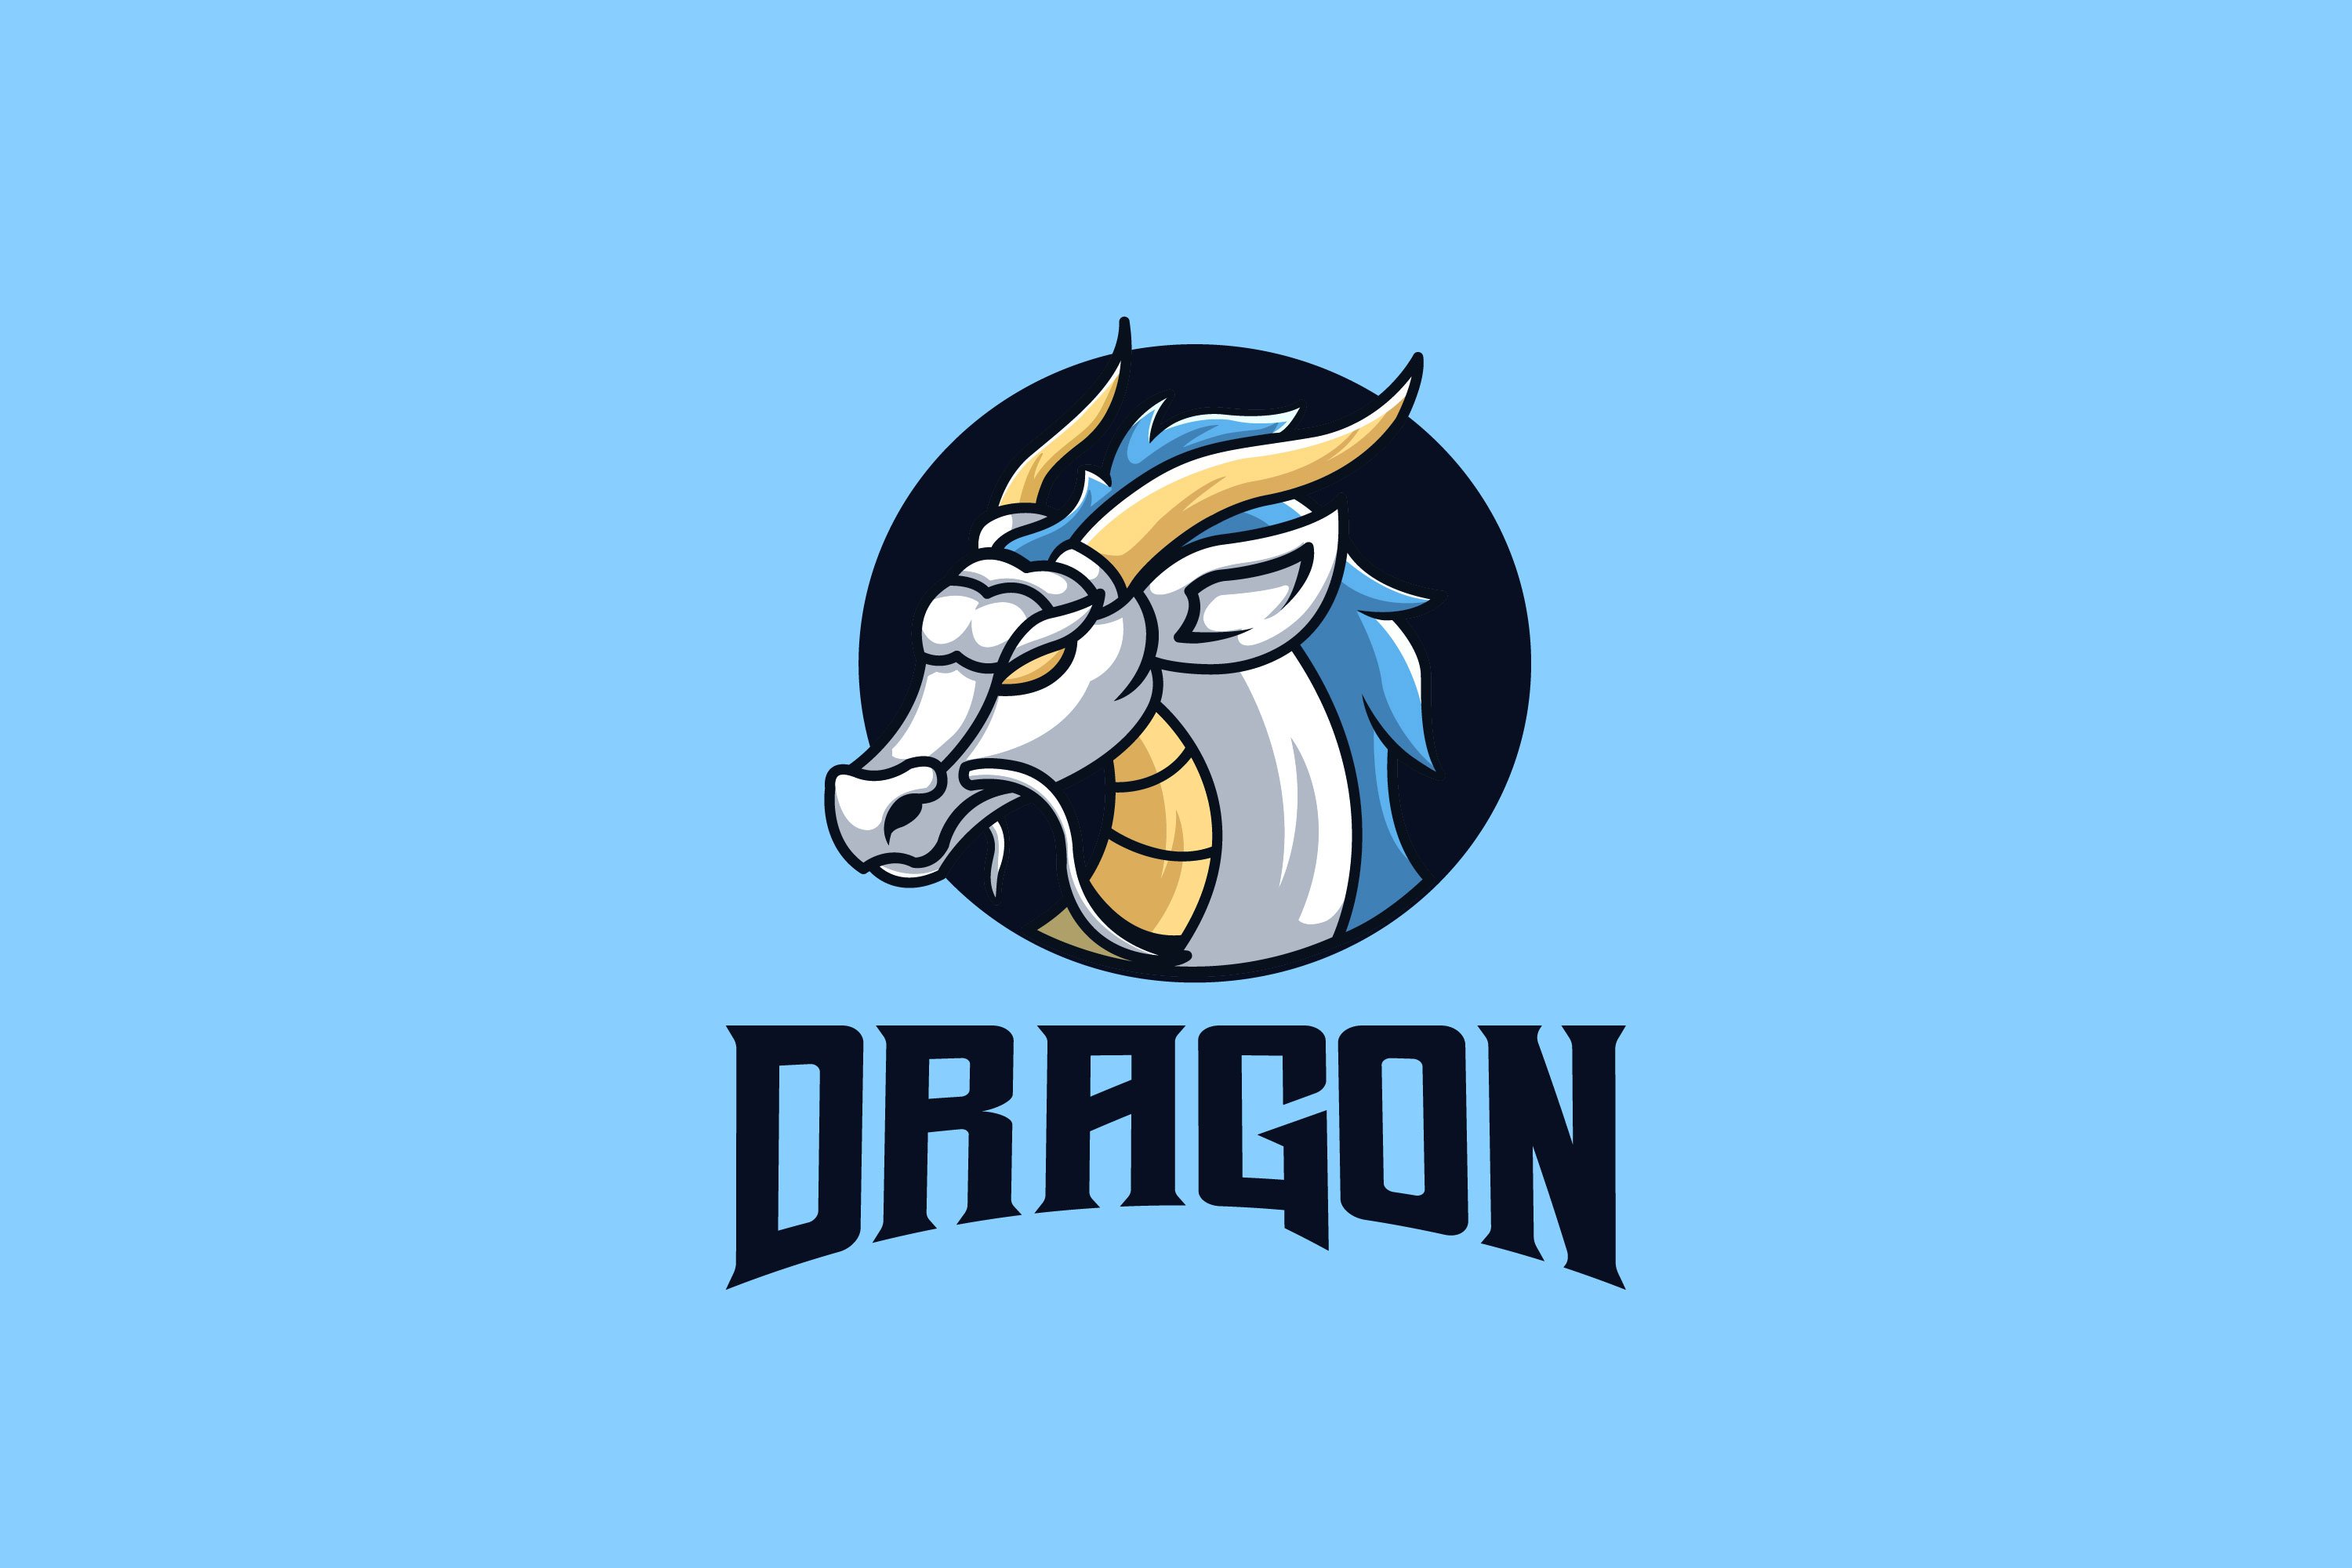 White Dragon Logo cover image.